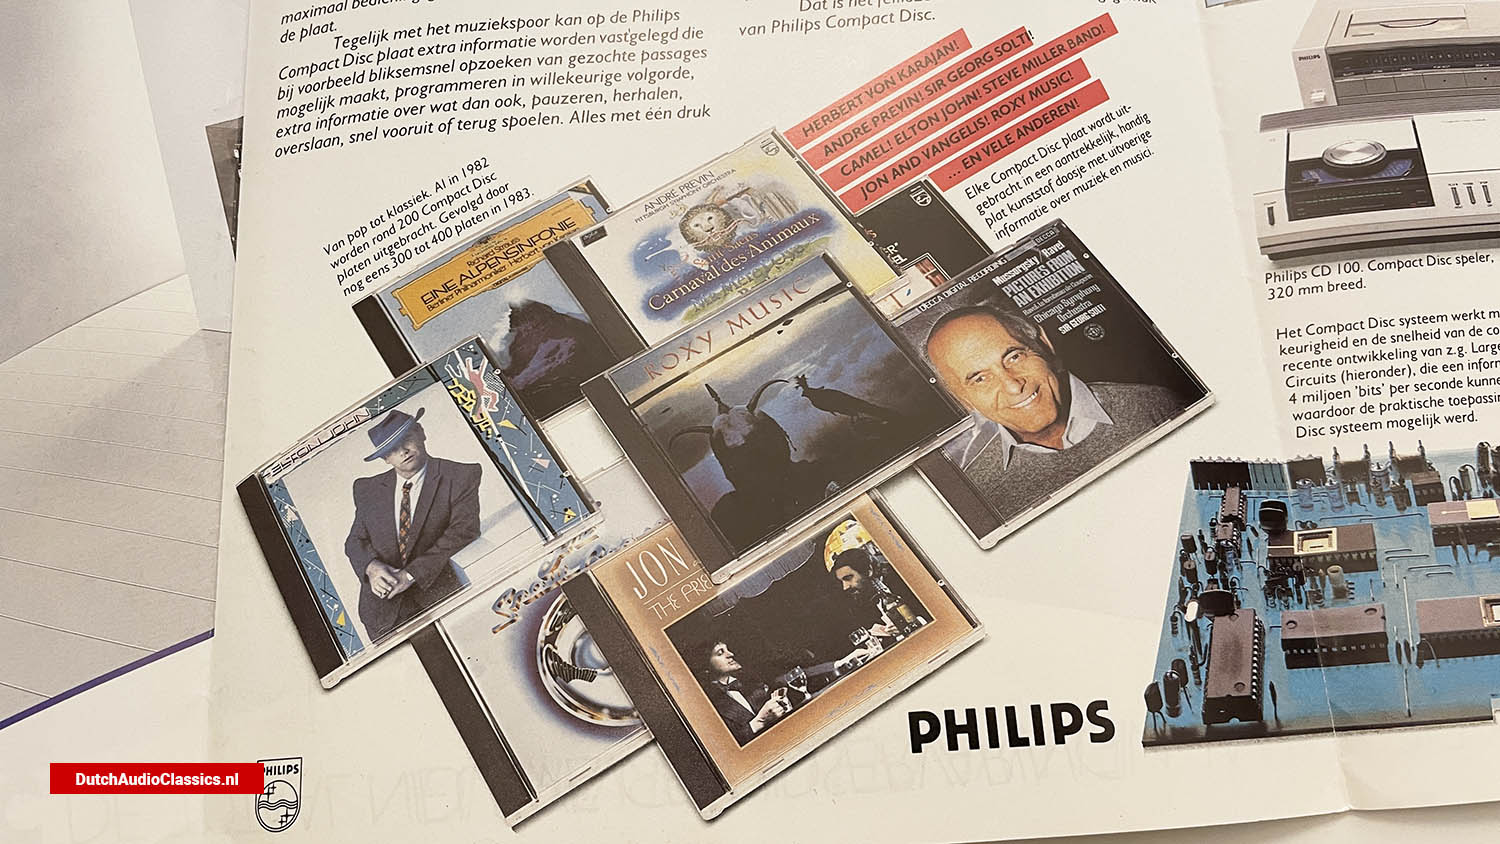 Philips fake CD inserts cd200